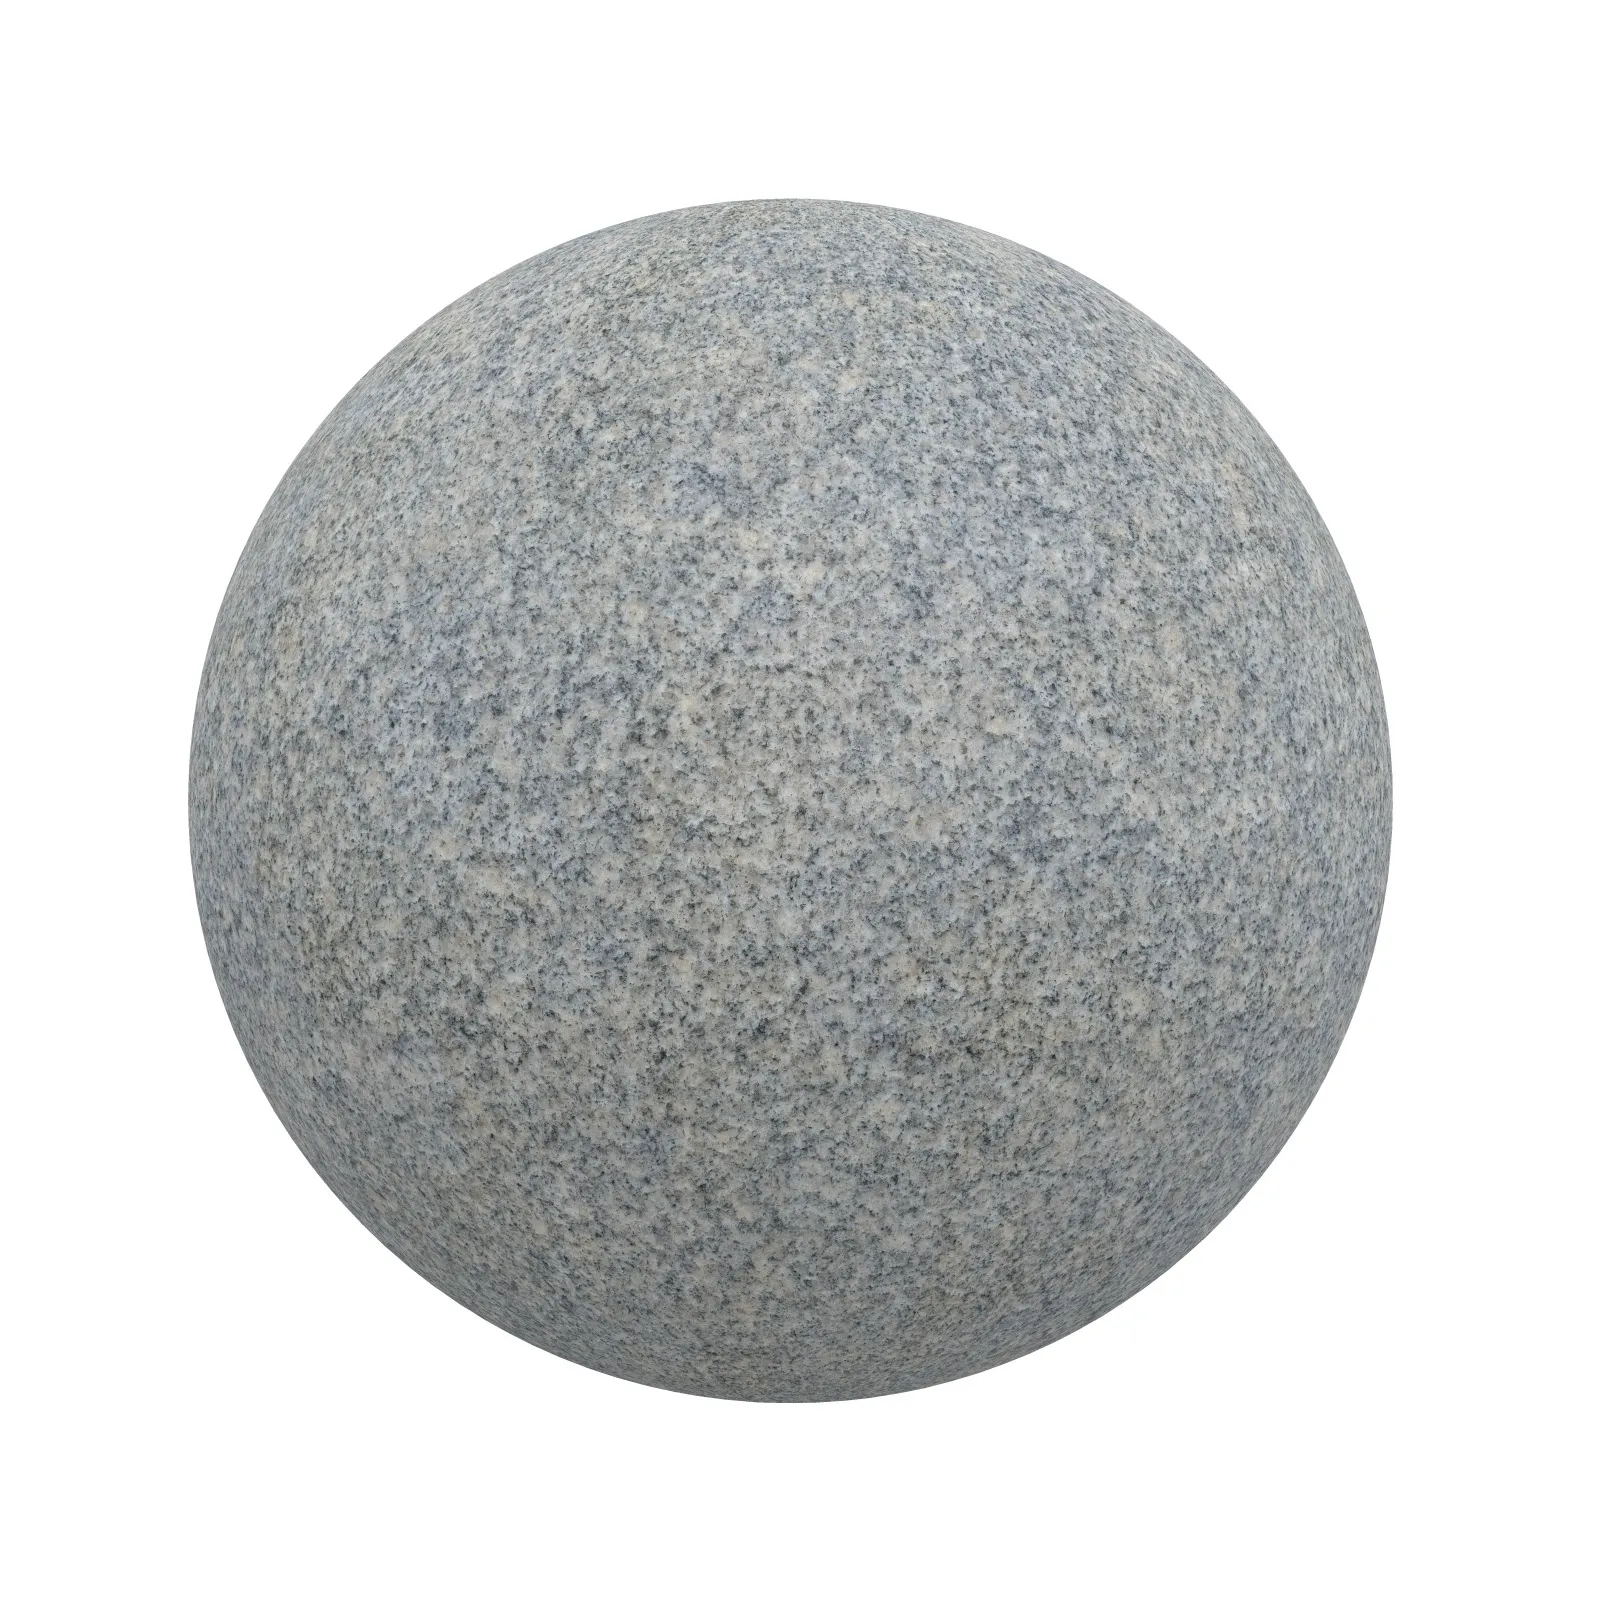 TEXTURES – STONES – CGAxis PBR Colection Vol 1 Stones – grey granite